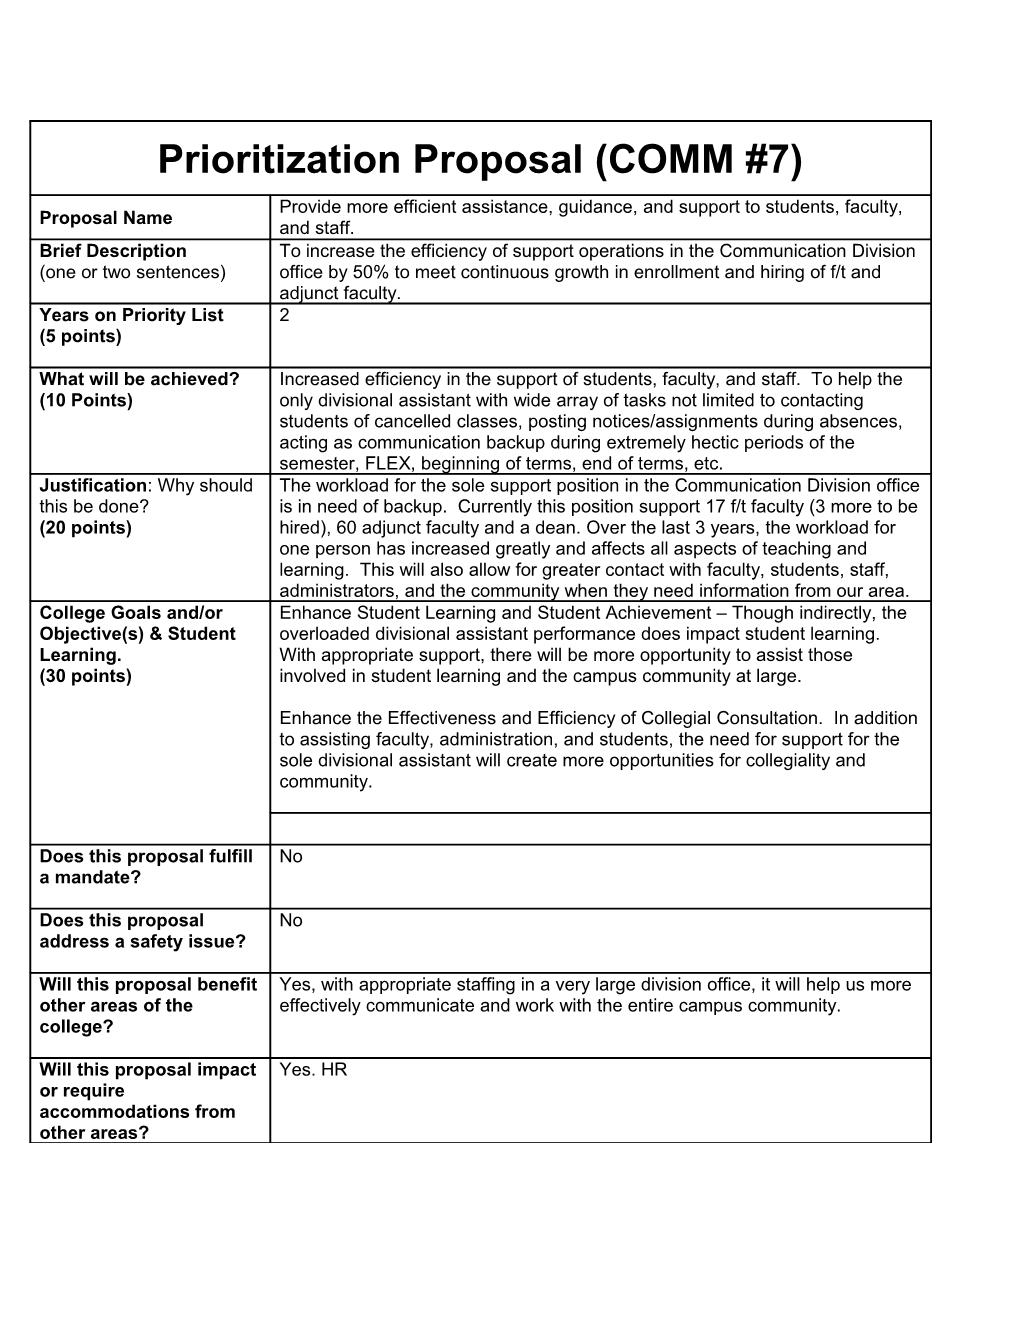 Prioritization Proposal (COMM #1)